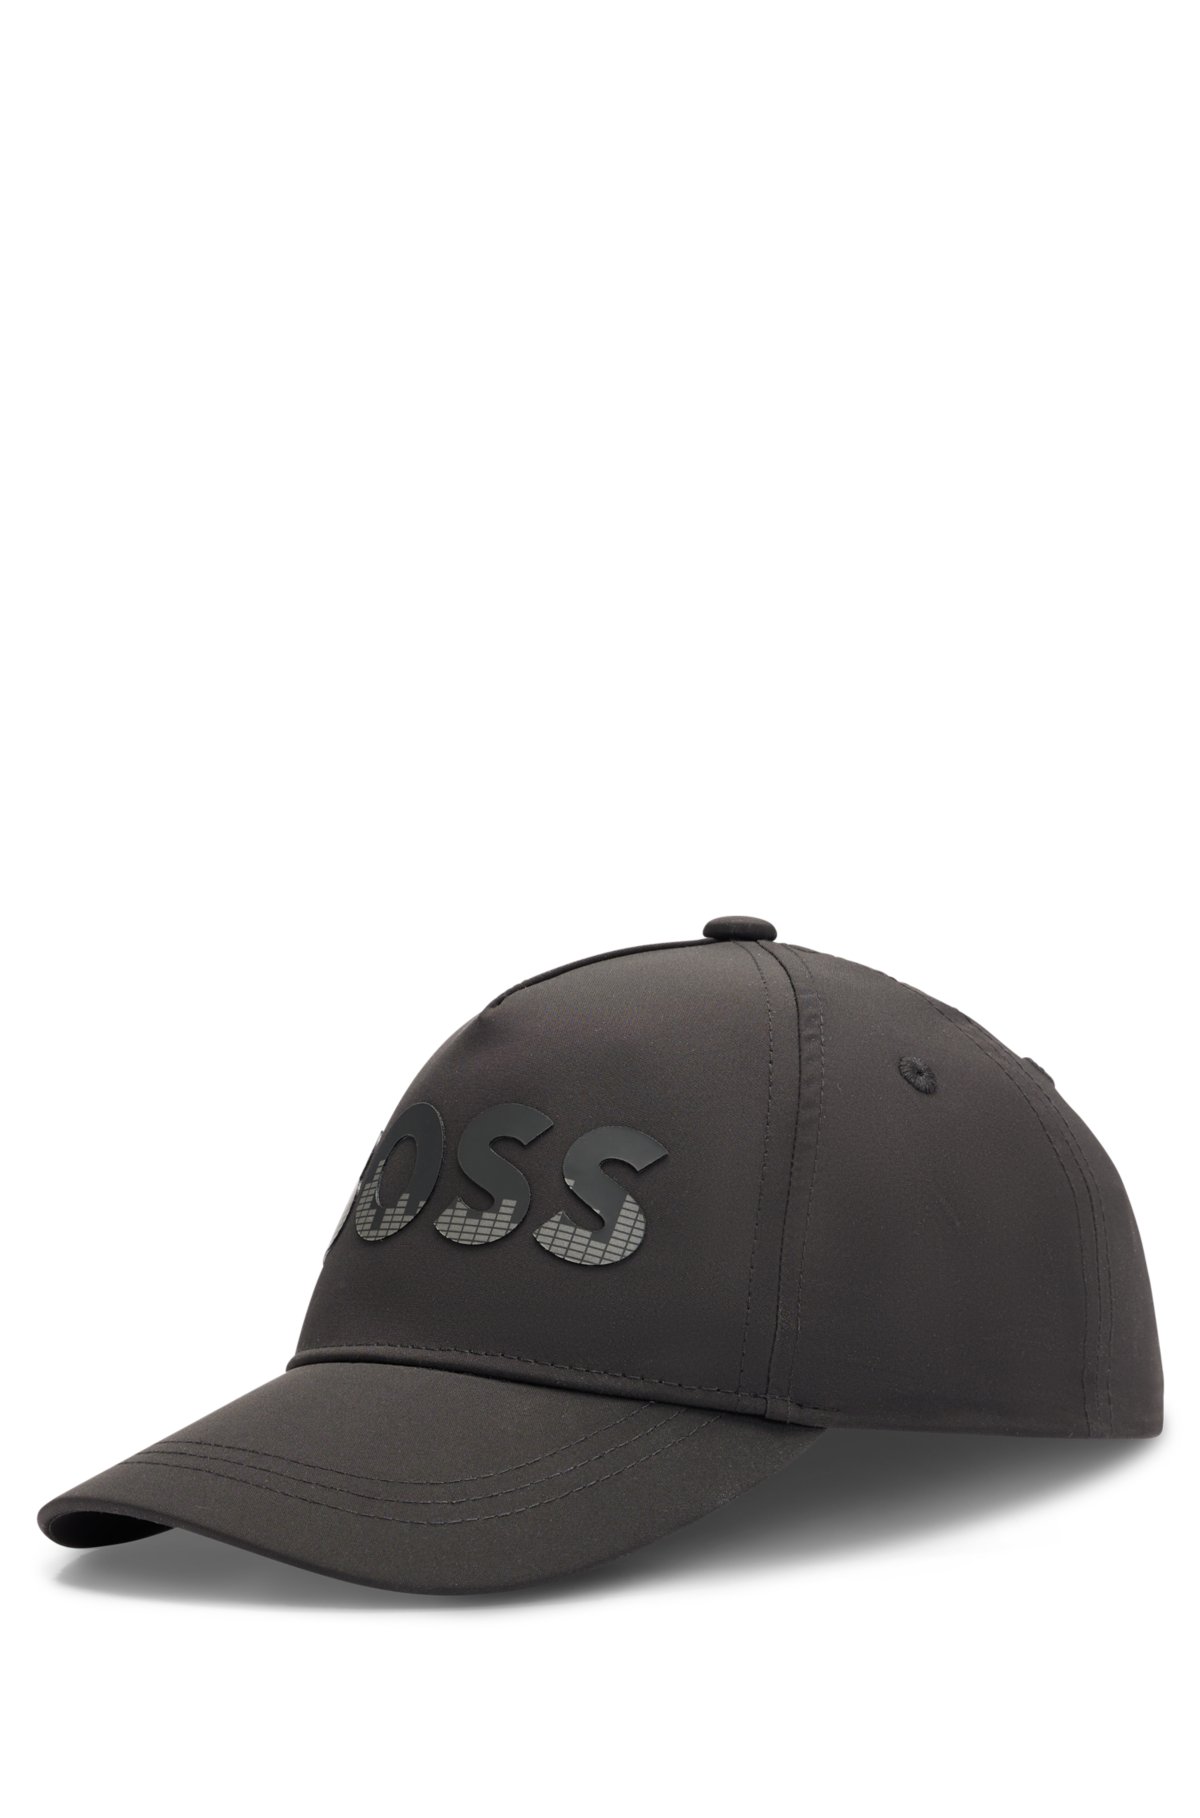 Kids' cap with decorative reflective logo, Black